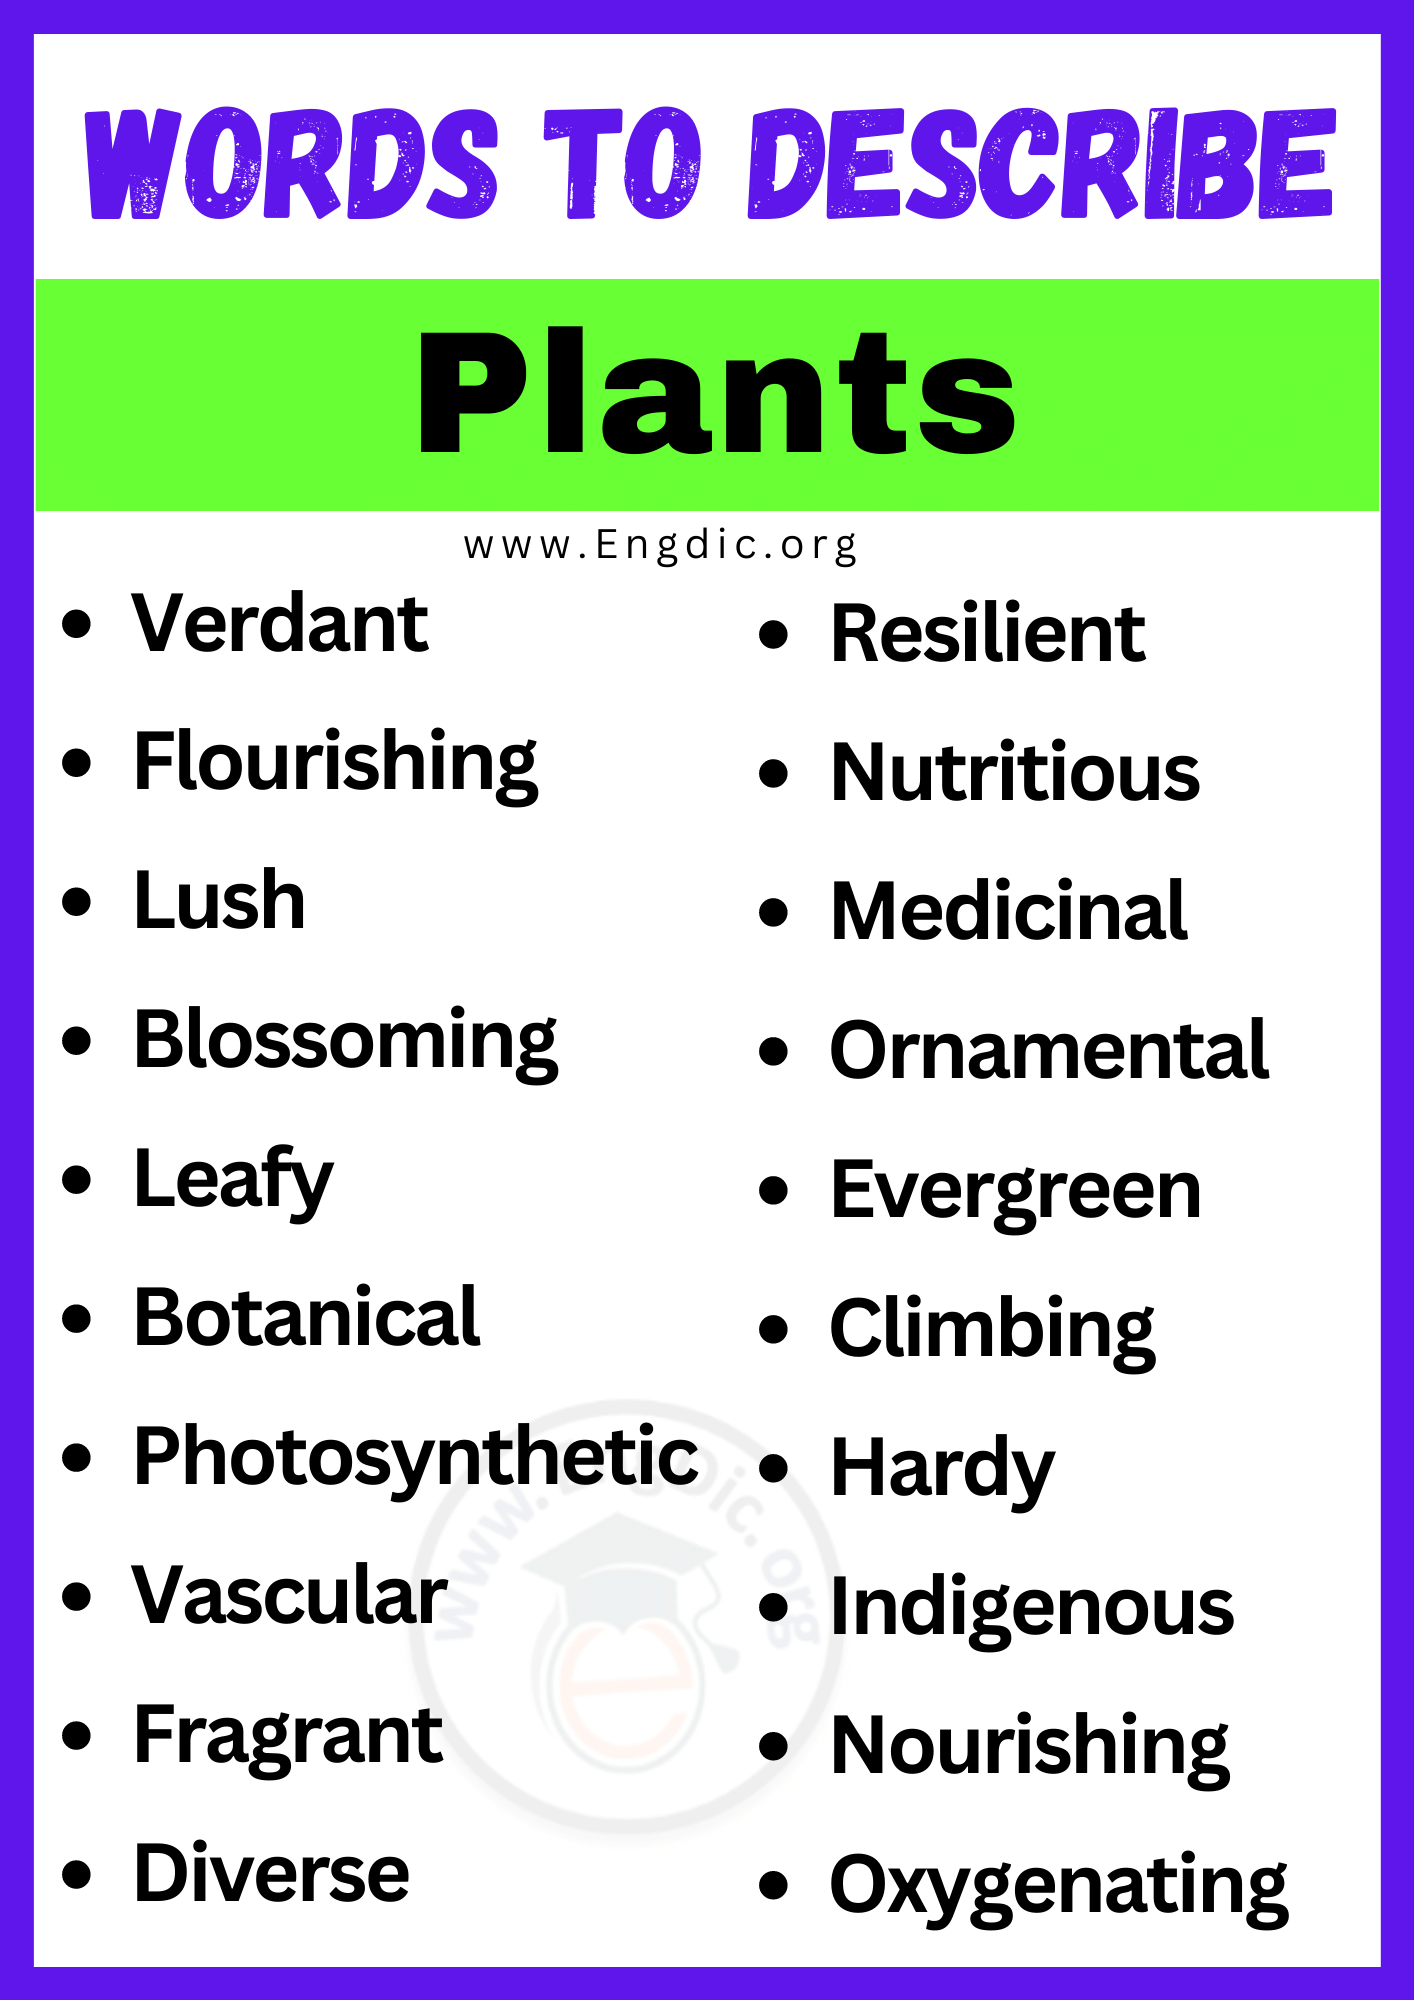 Words to Describe Plants